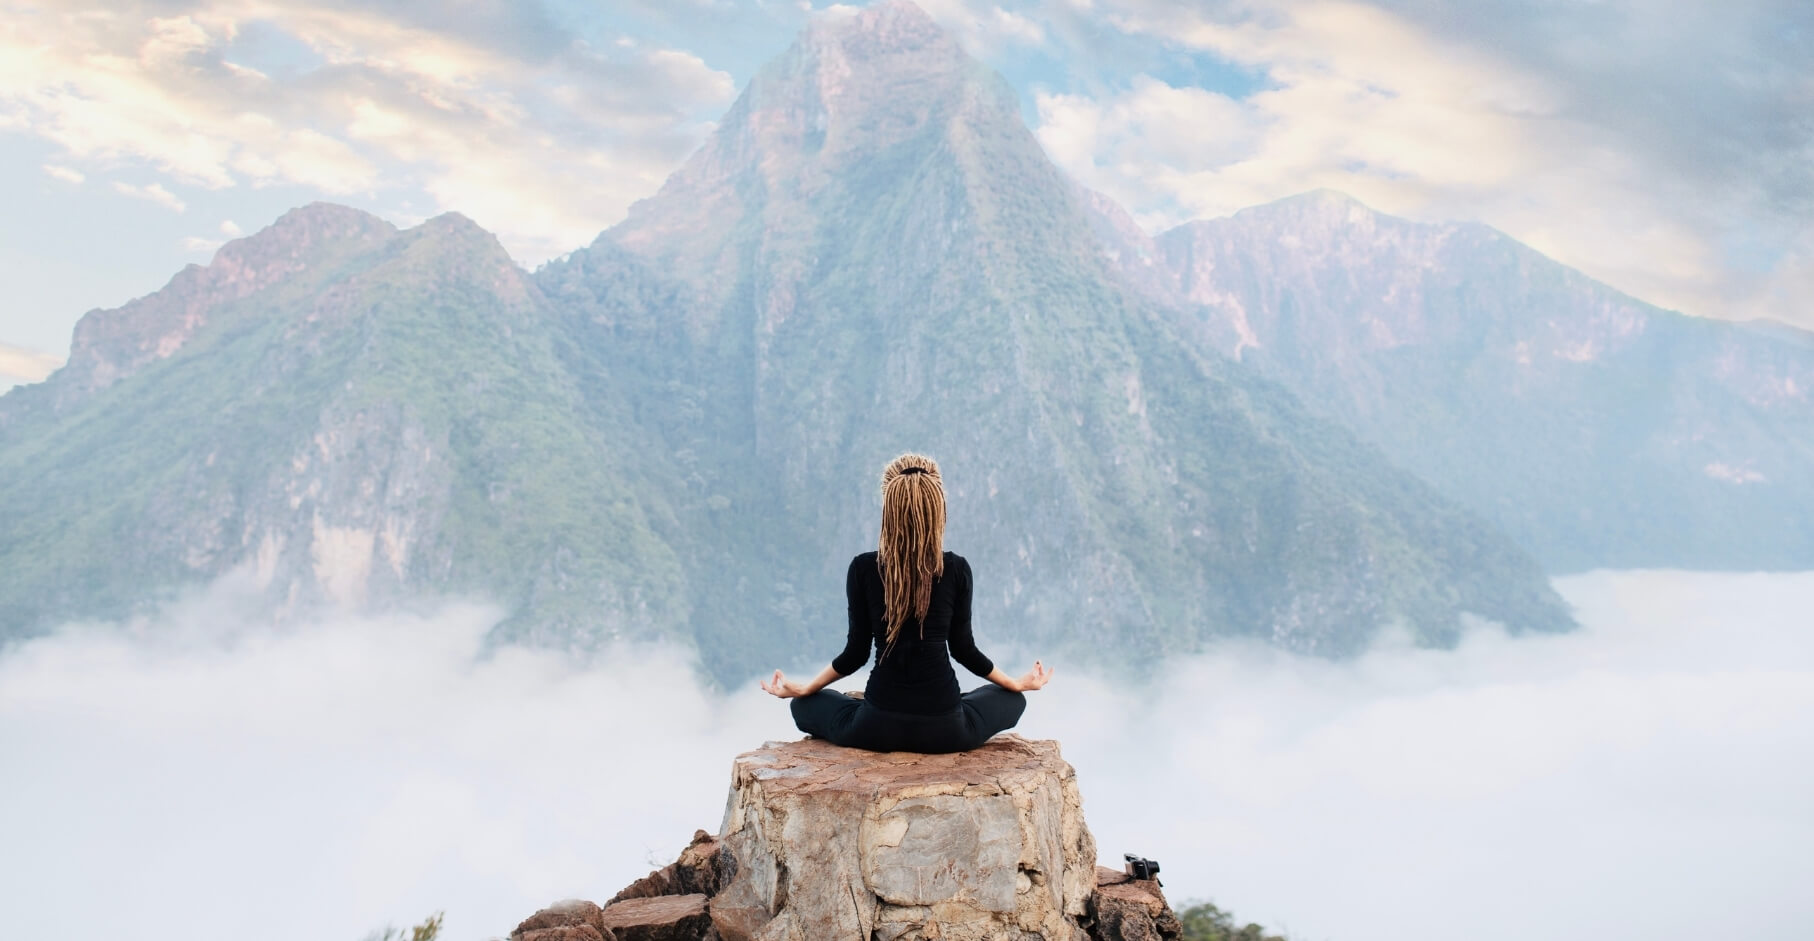 A woman meditating overlooking a serene mountain landscape showcasing abundance.